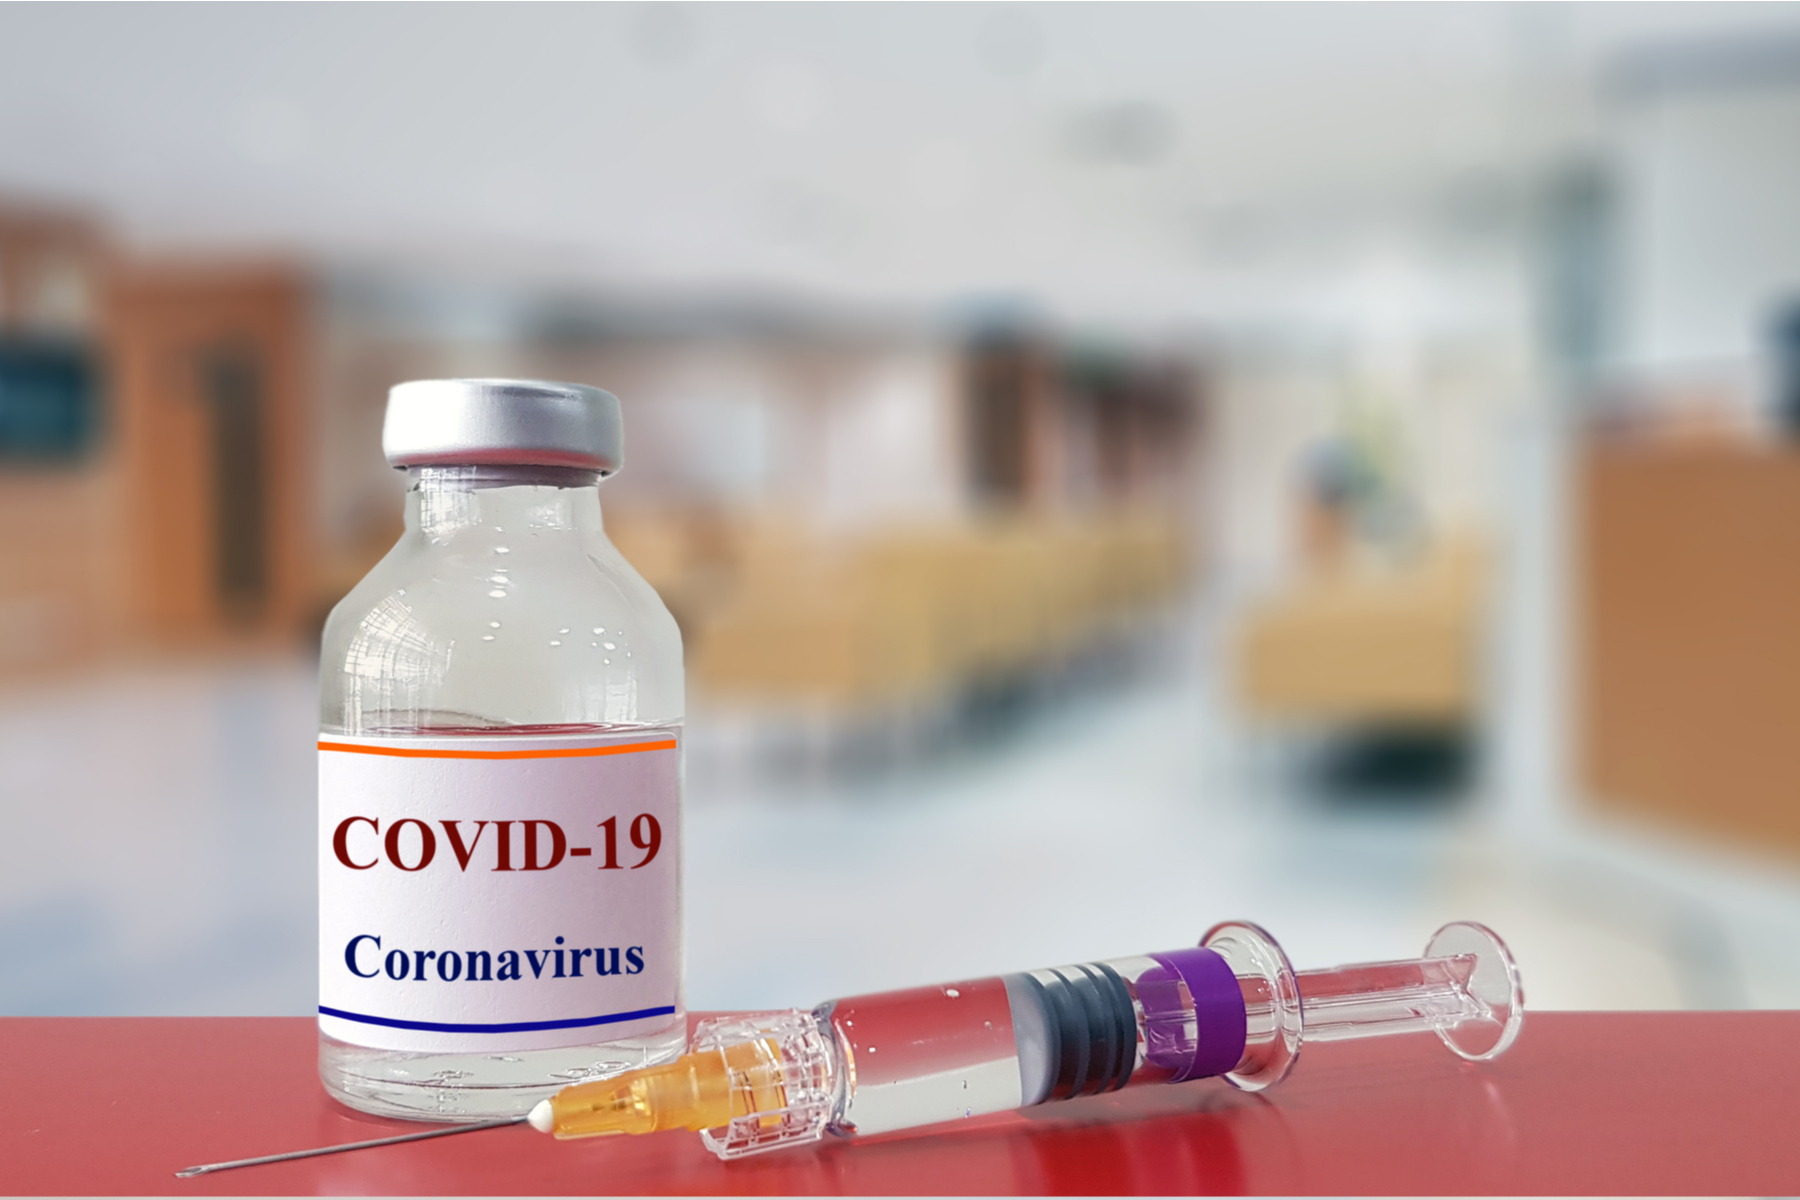 HIV and Anti-Malaria Drugs to Cure Coronavirus